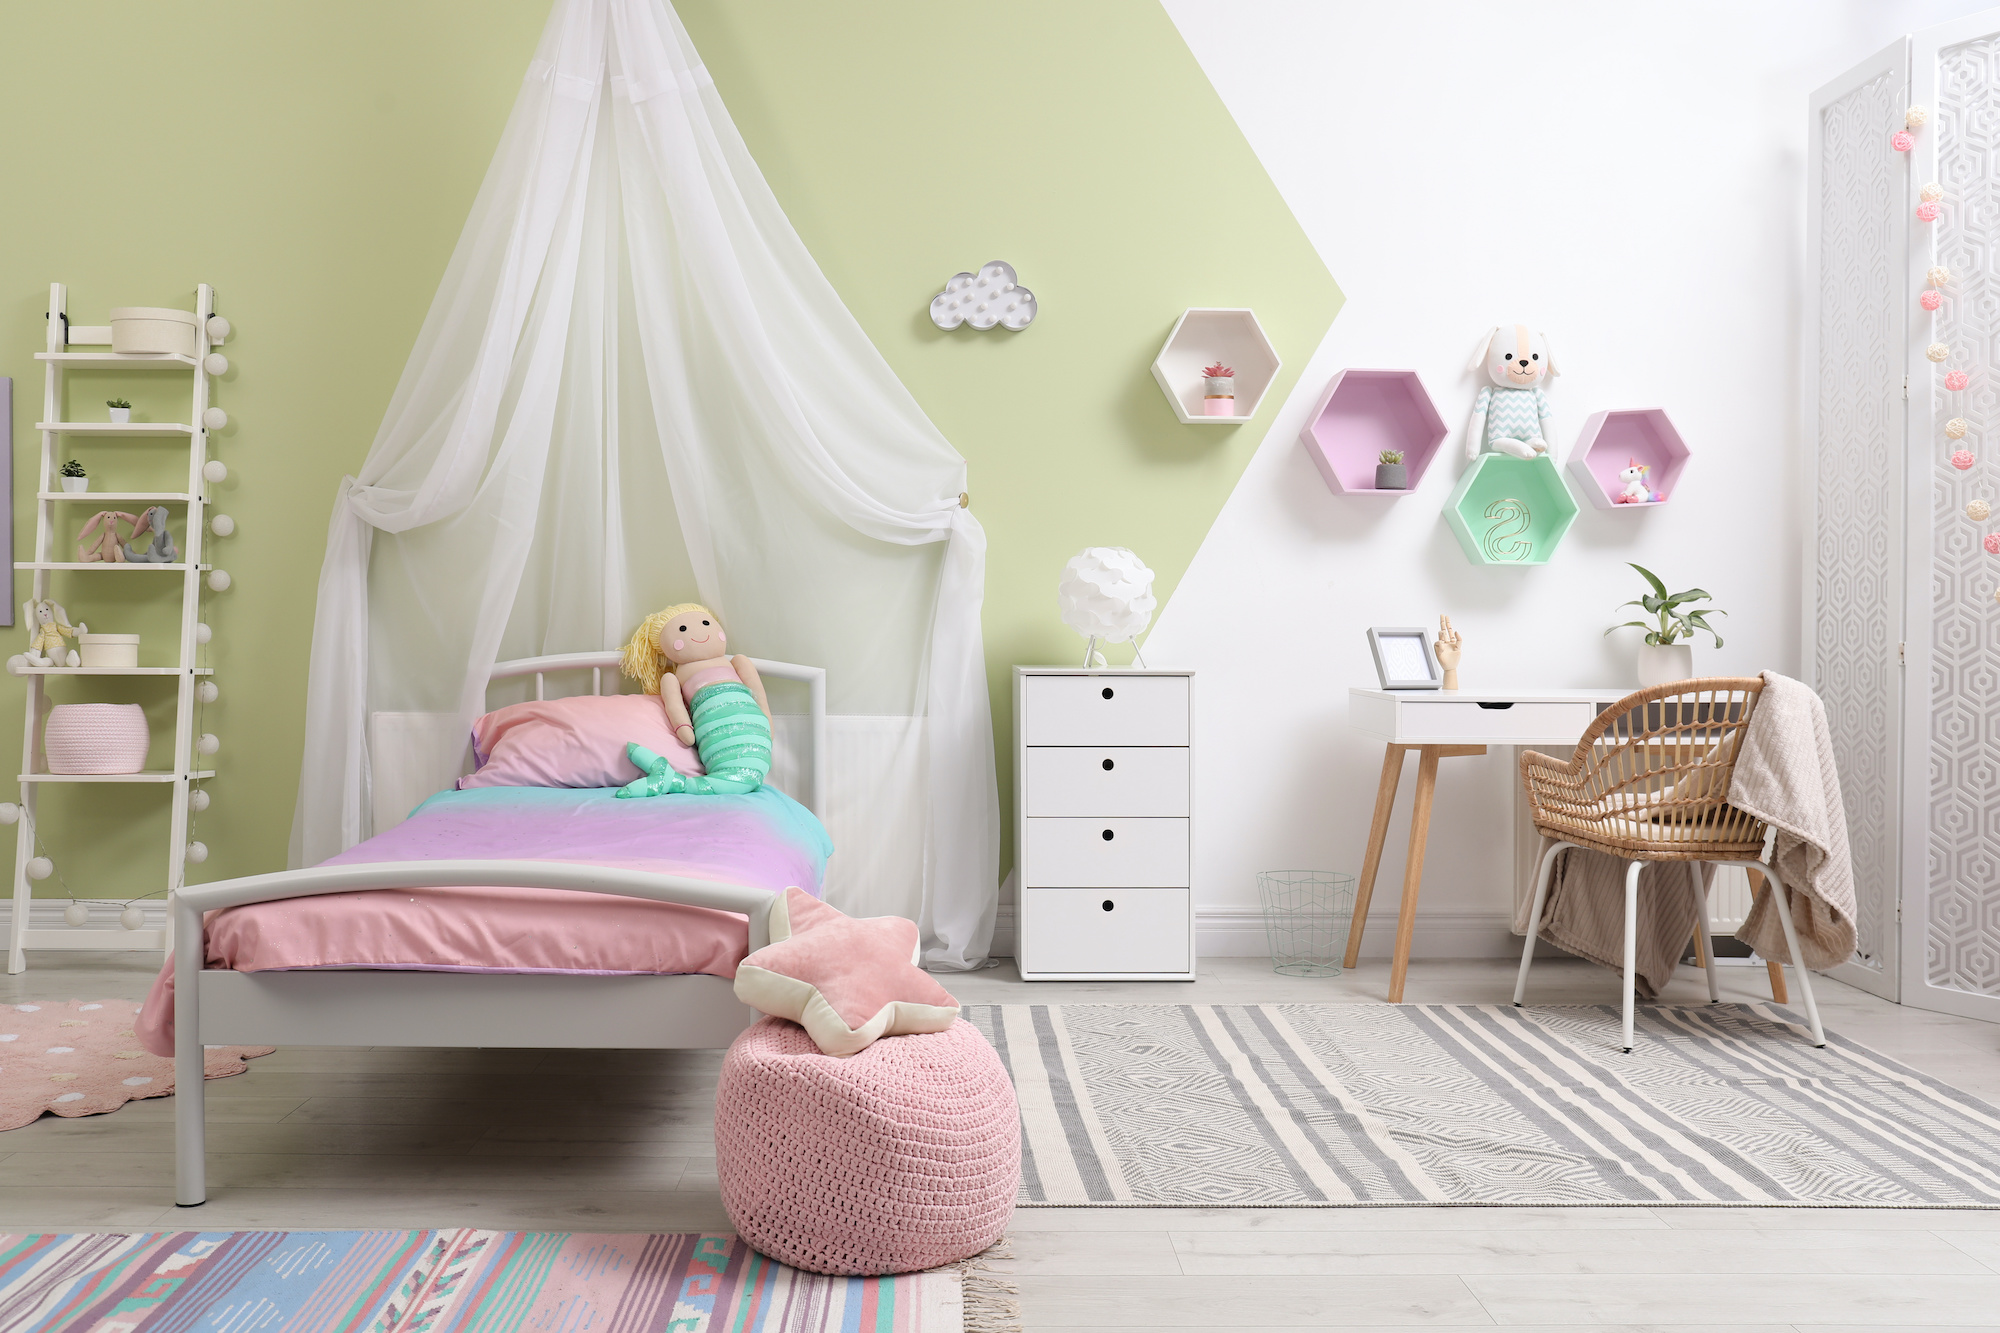 Inexpensive interior design ideas to decorate your child's bedroom